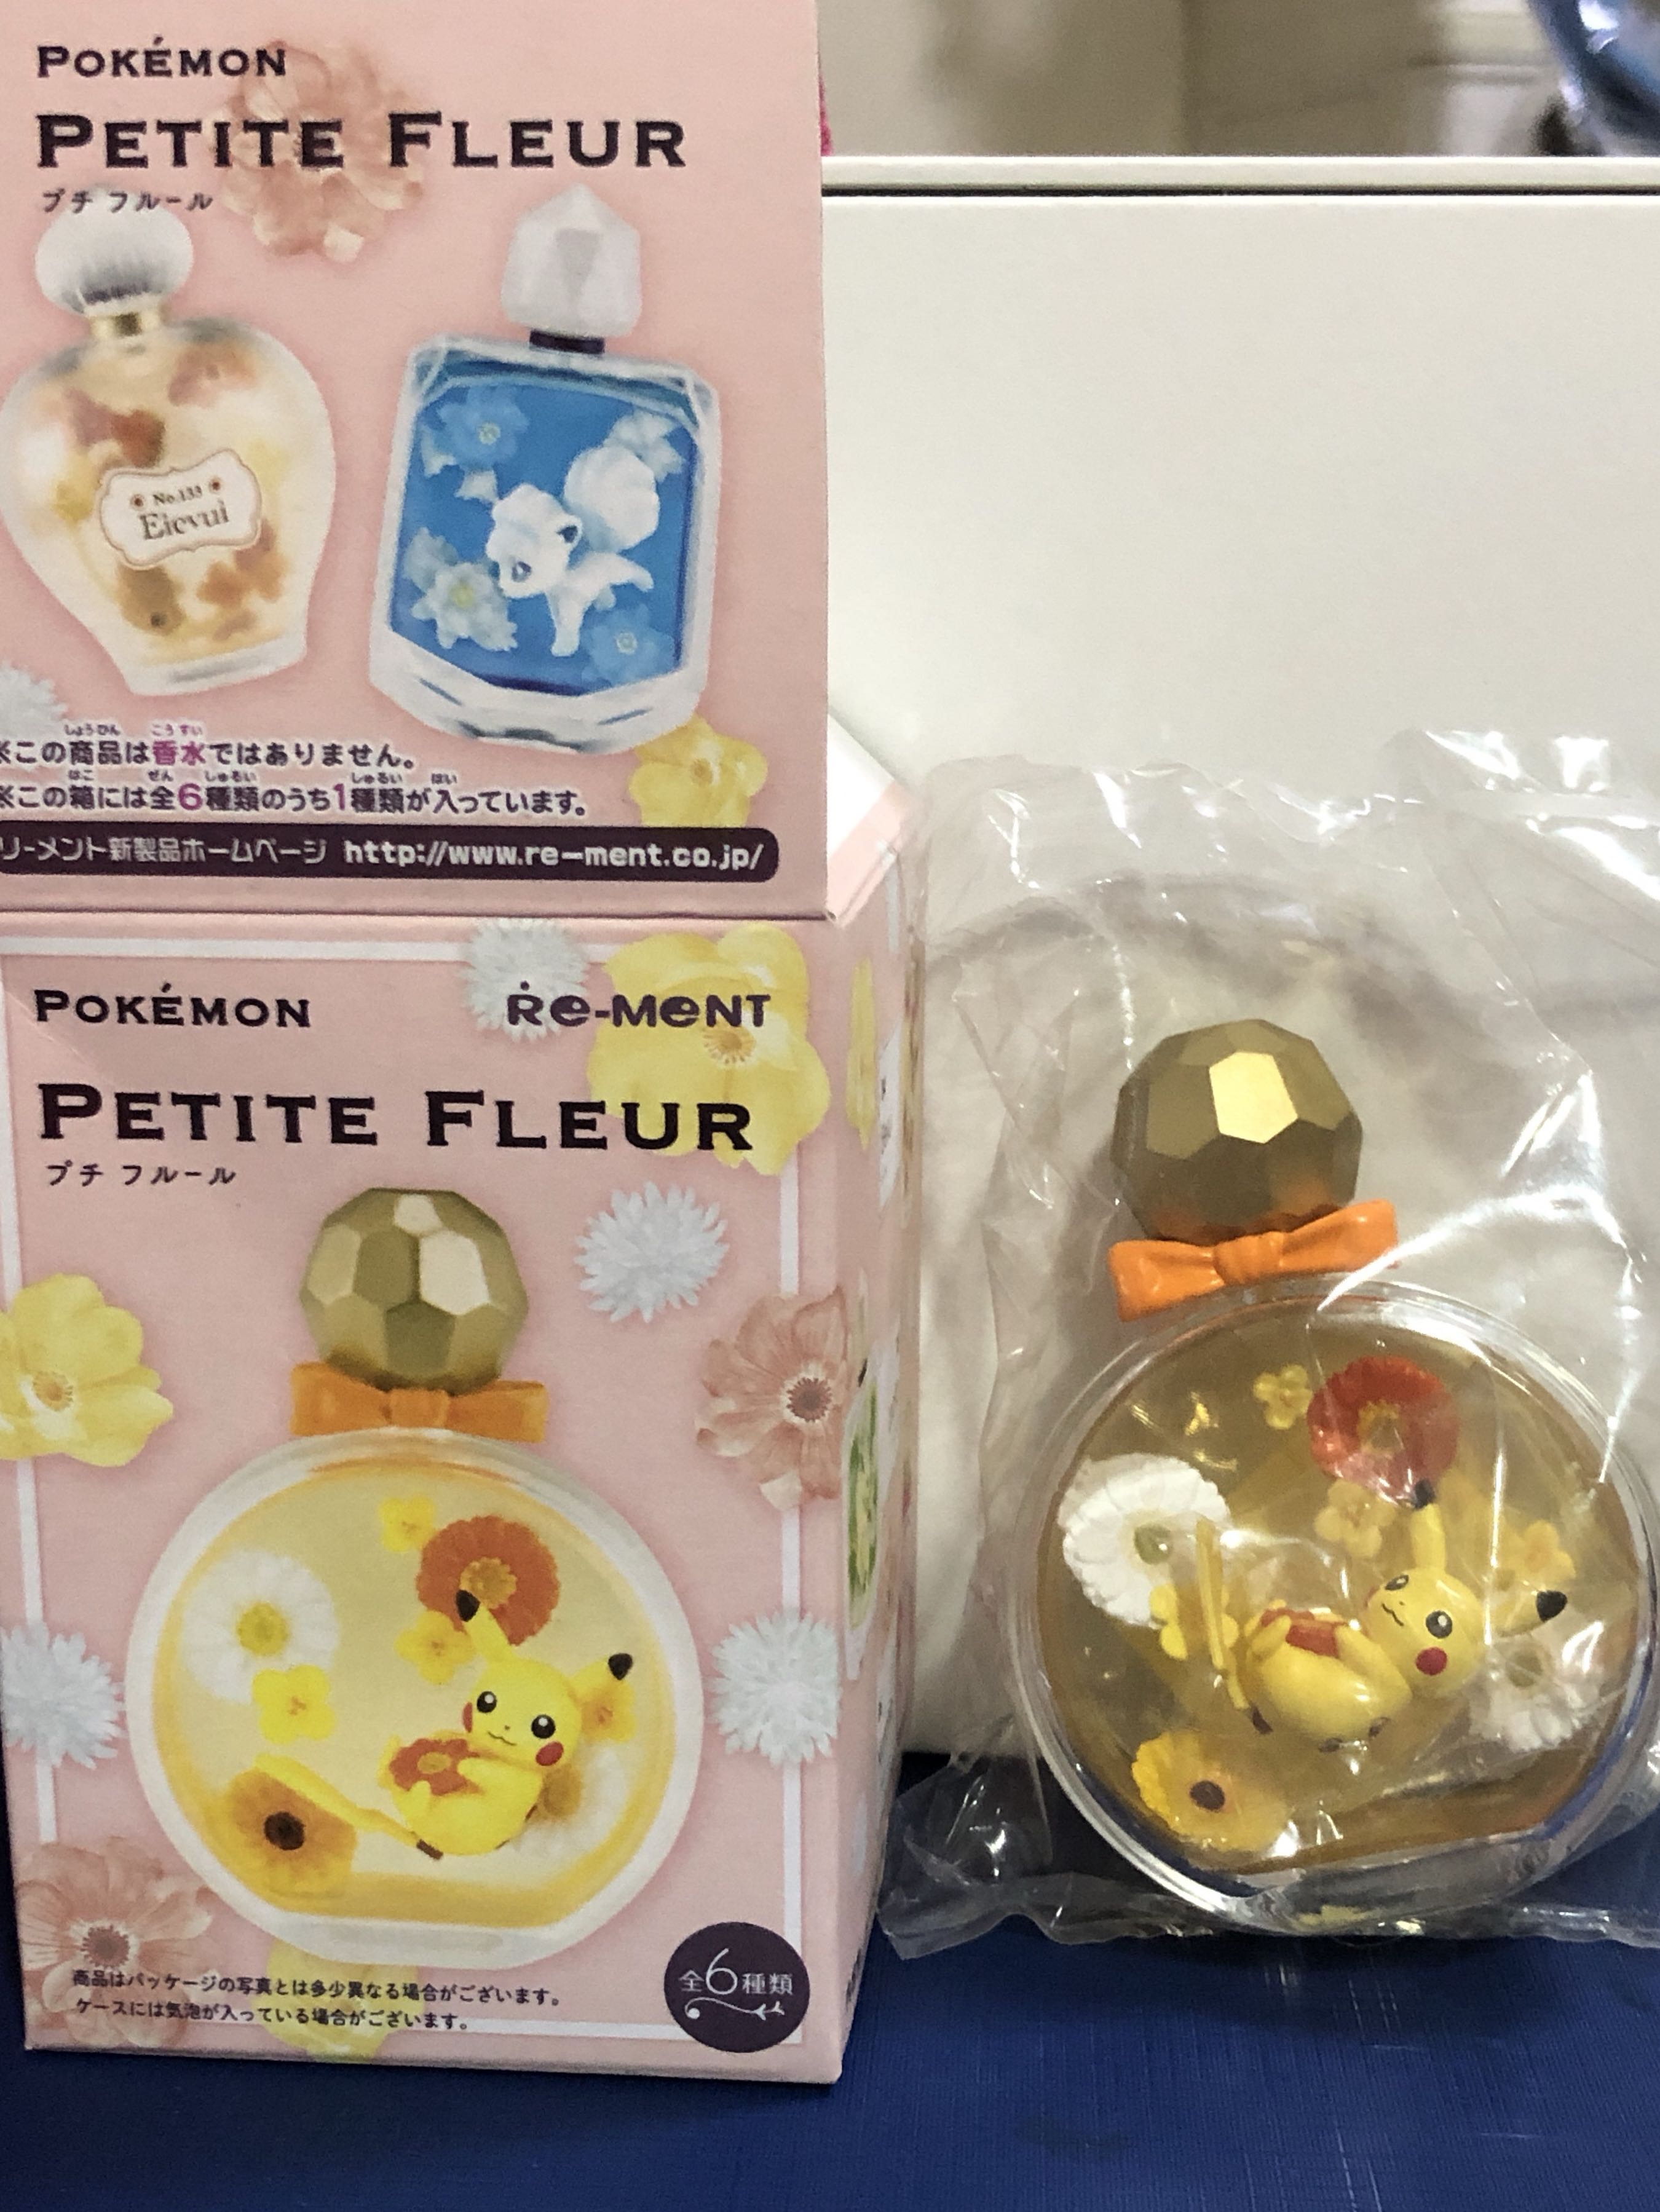 Rement Pokemon Petite Fleur Pikachu Hobbies Toys Toys Games On Carousell